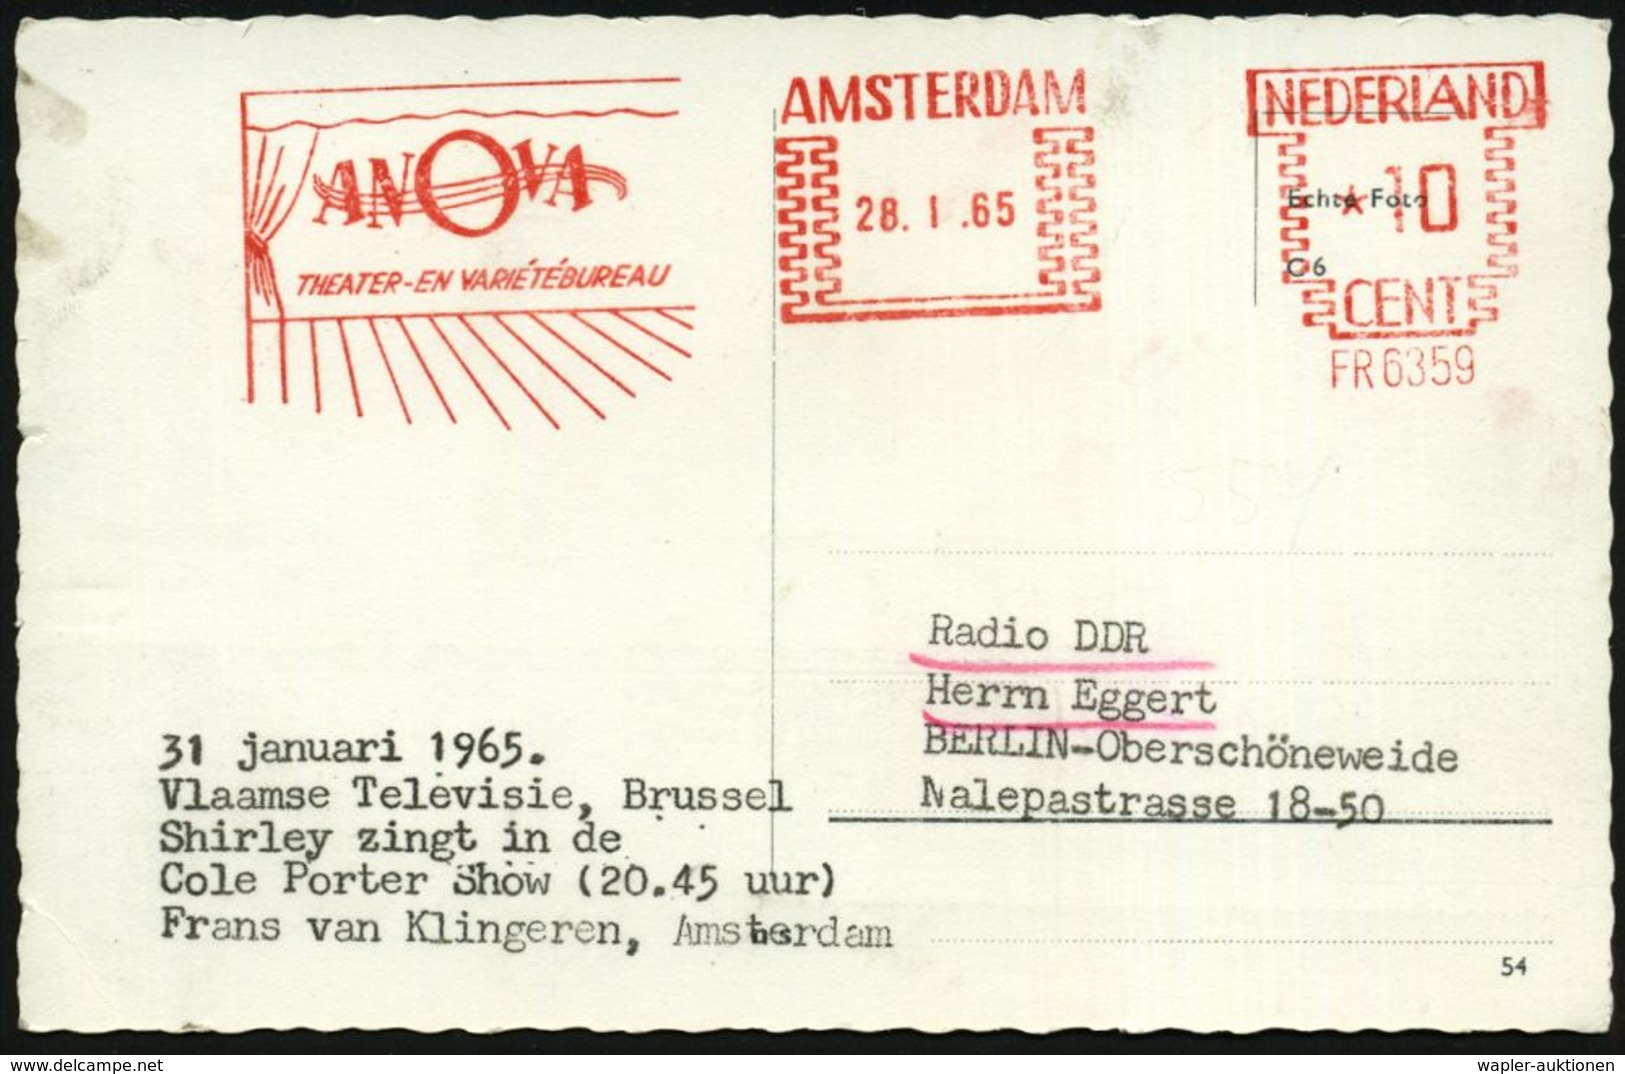 NIEDERLANDE 1965 (28.1.) AFS.: AMSTERDAM/FR 6359/ANOVA/THEATER-EN VARIETEBUREAU (Bühne) Bedarfs-Ausl.-Ak. "Cole Porter S - Cirque